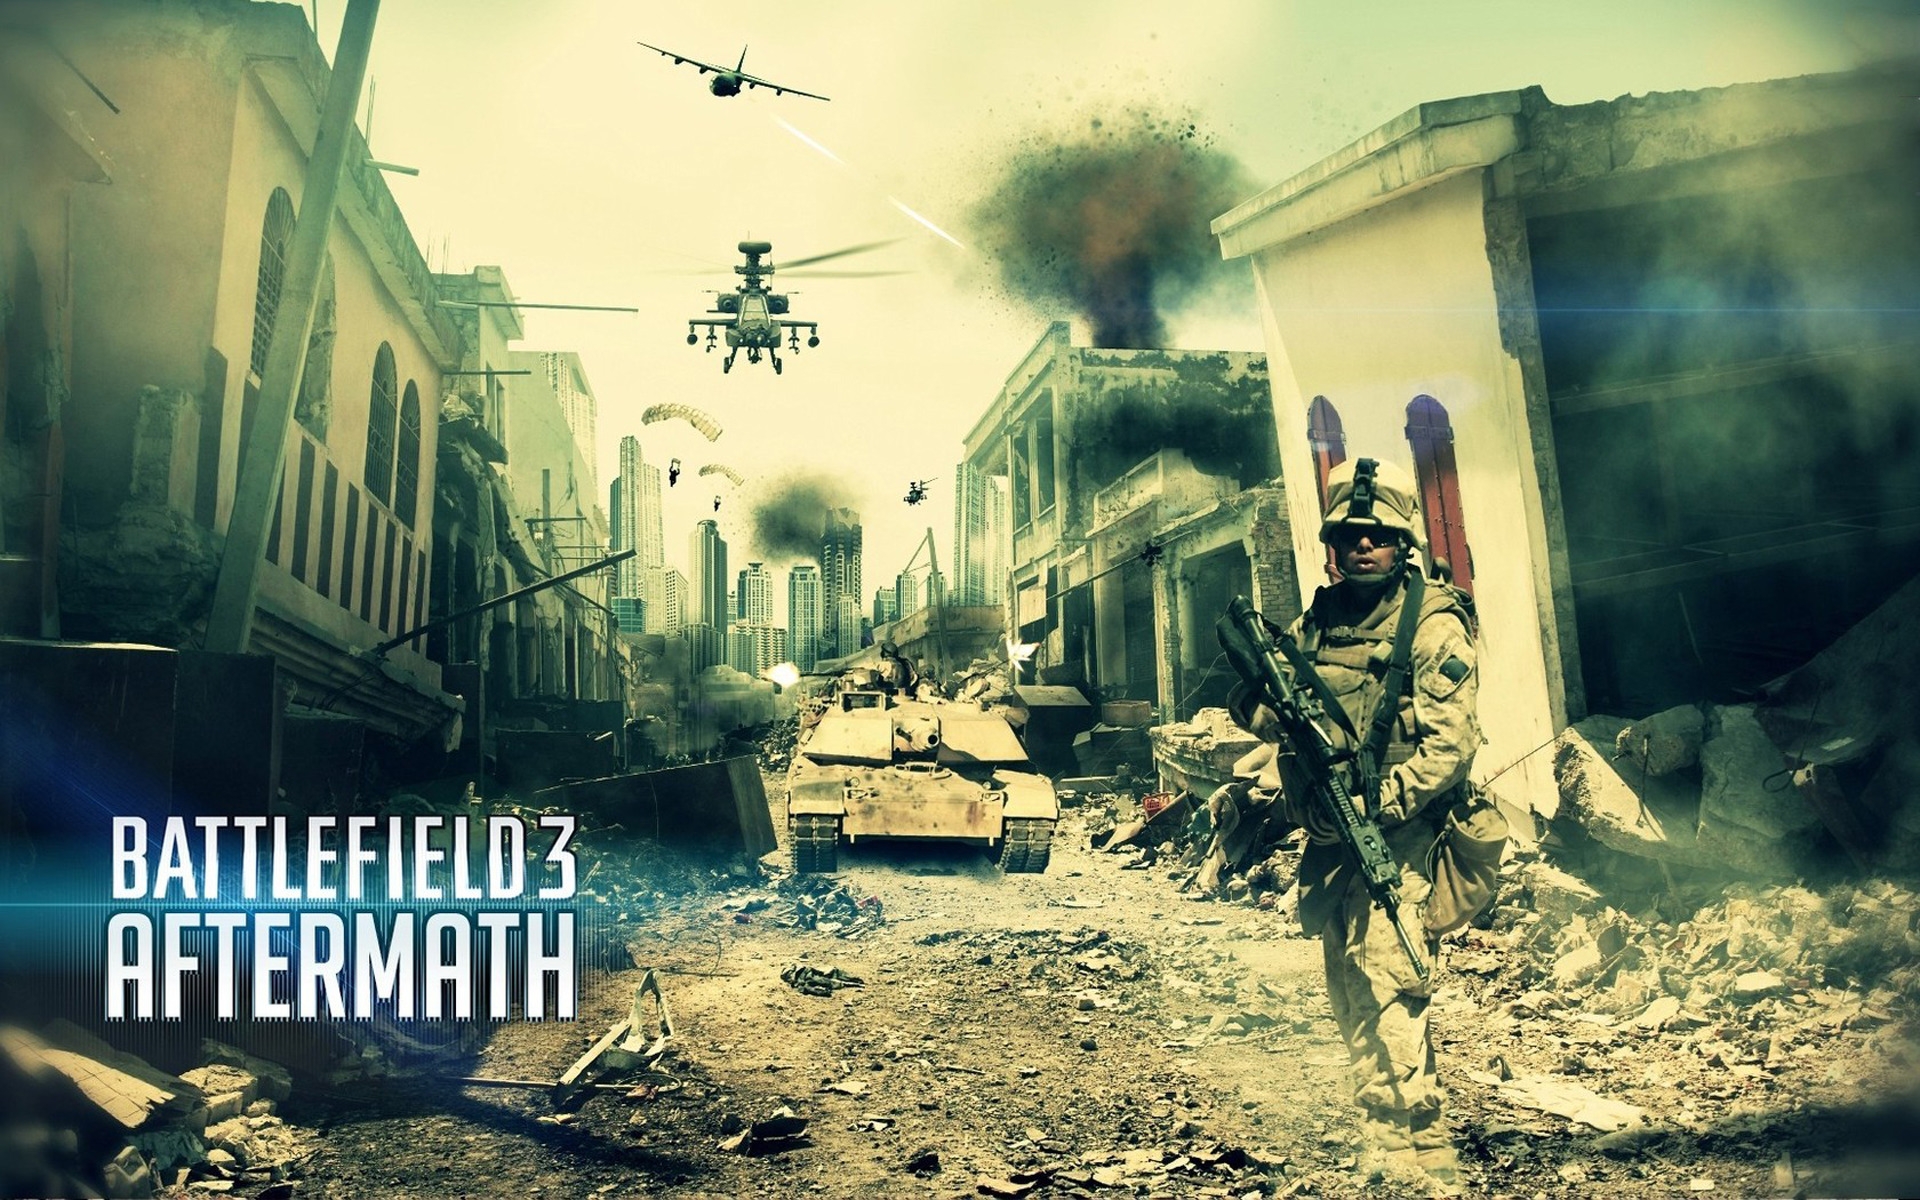 Battlefield 3 Aftermath for 1920 x 1200 widescreen resolution